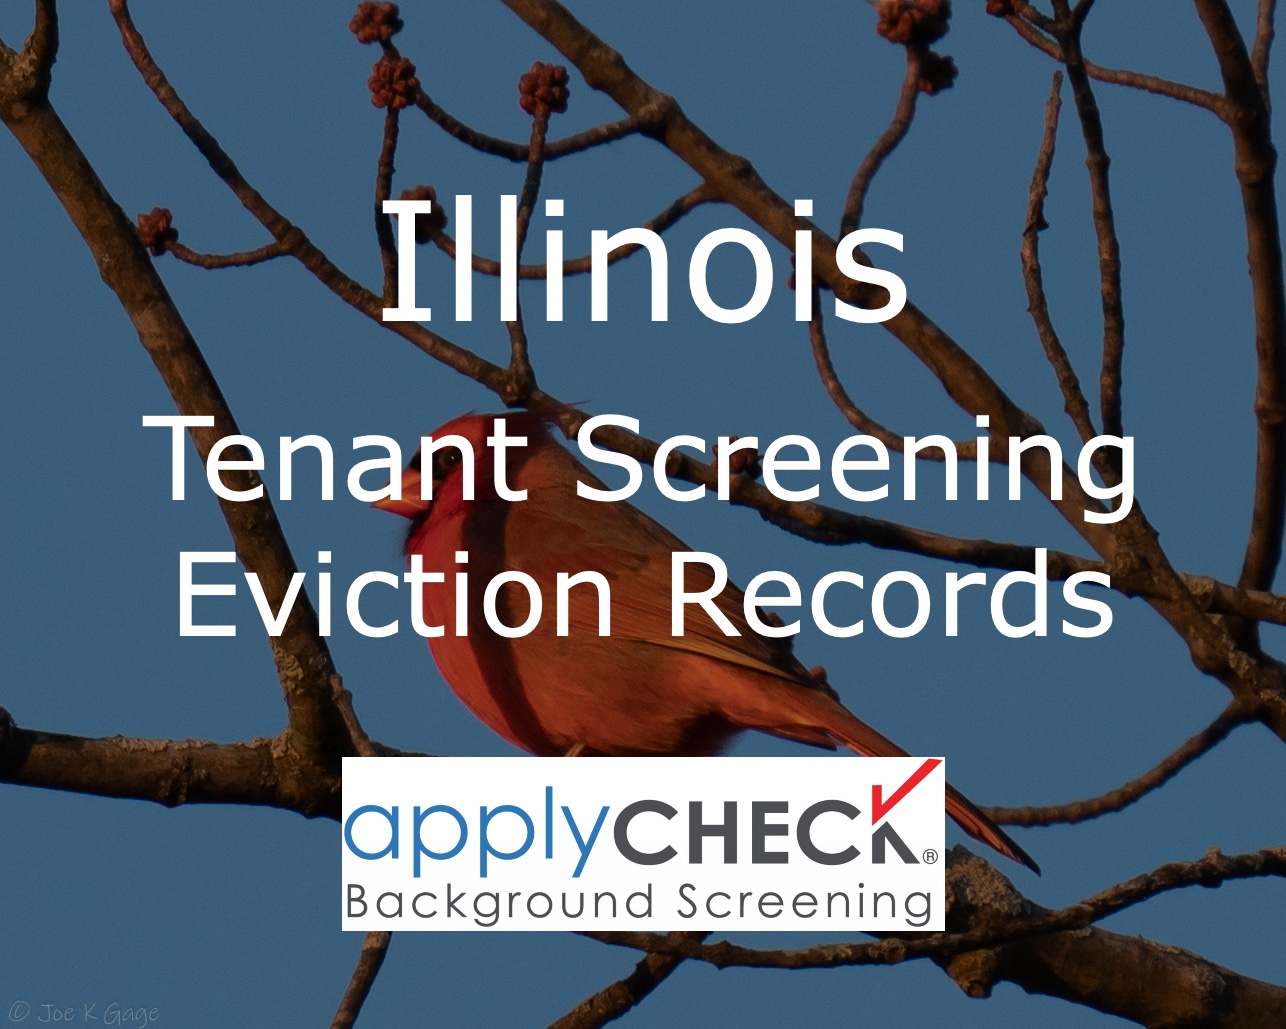 Illinois Tenant Screening Eviction Records